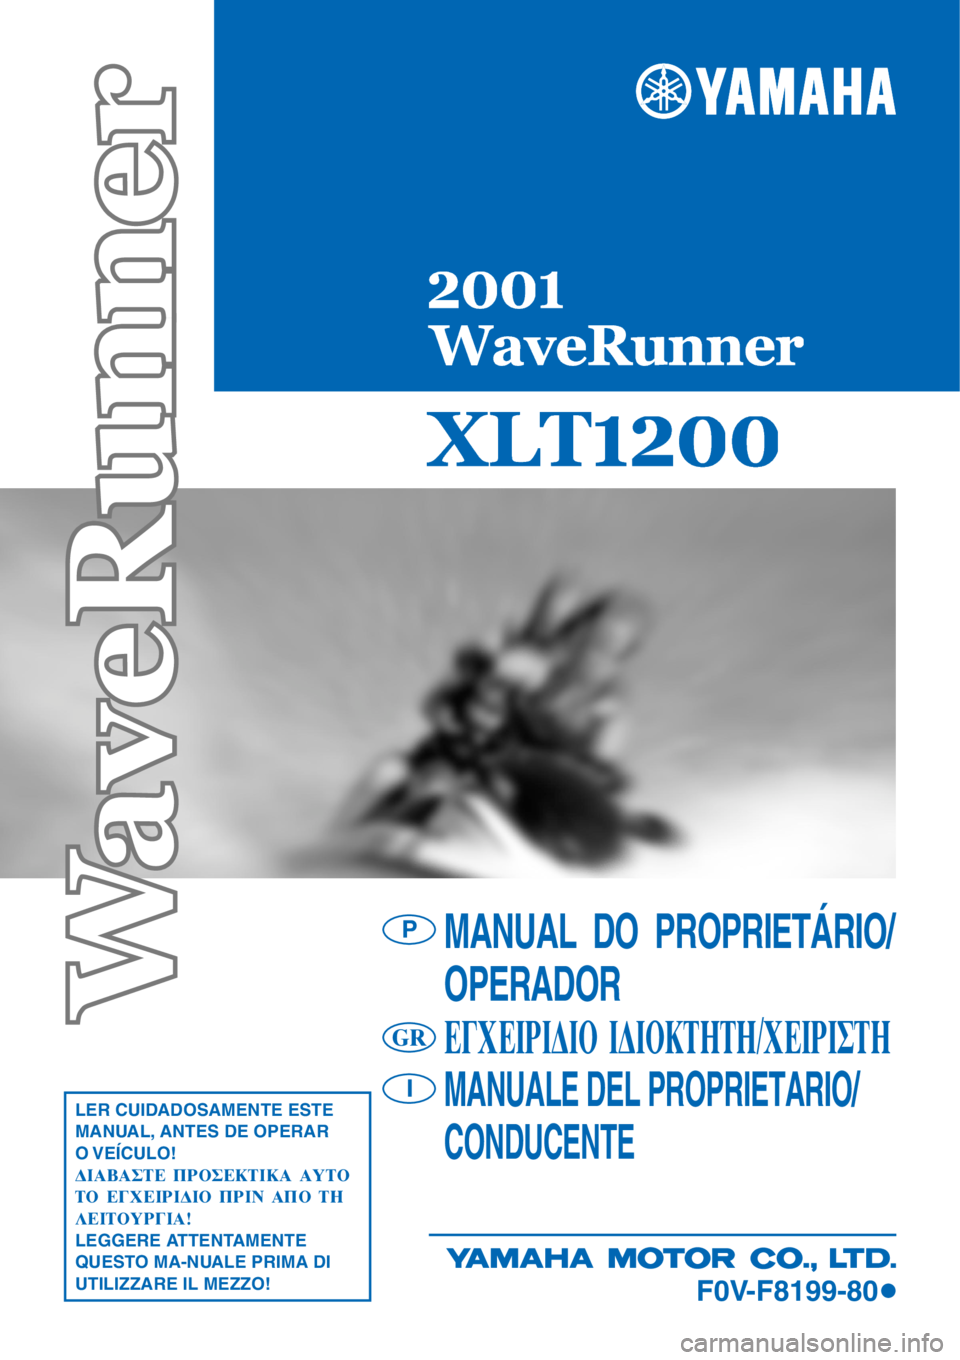 YAMAHA XL 1200 2001  Manuale duso (in Italian) 

MANUAL  DO  PROPRIETÁRIO/
OPERADOR
∂°Ã∂πƒπ¢π√ π¢π√∫∆∏∆∏/Ã∂πƒπ™∆∏
MANUALE DEL PROPRIETARIO/
CONDUCENTELER CUIDADOSAMENTE ESTE
MANUAL, ANTES DE OPER